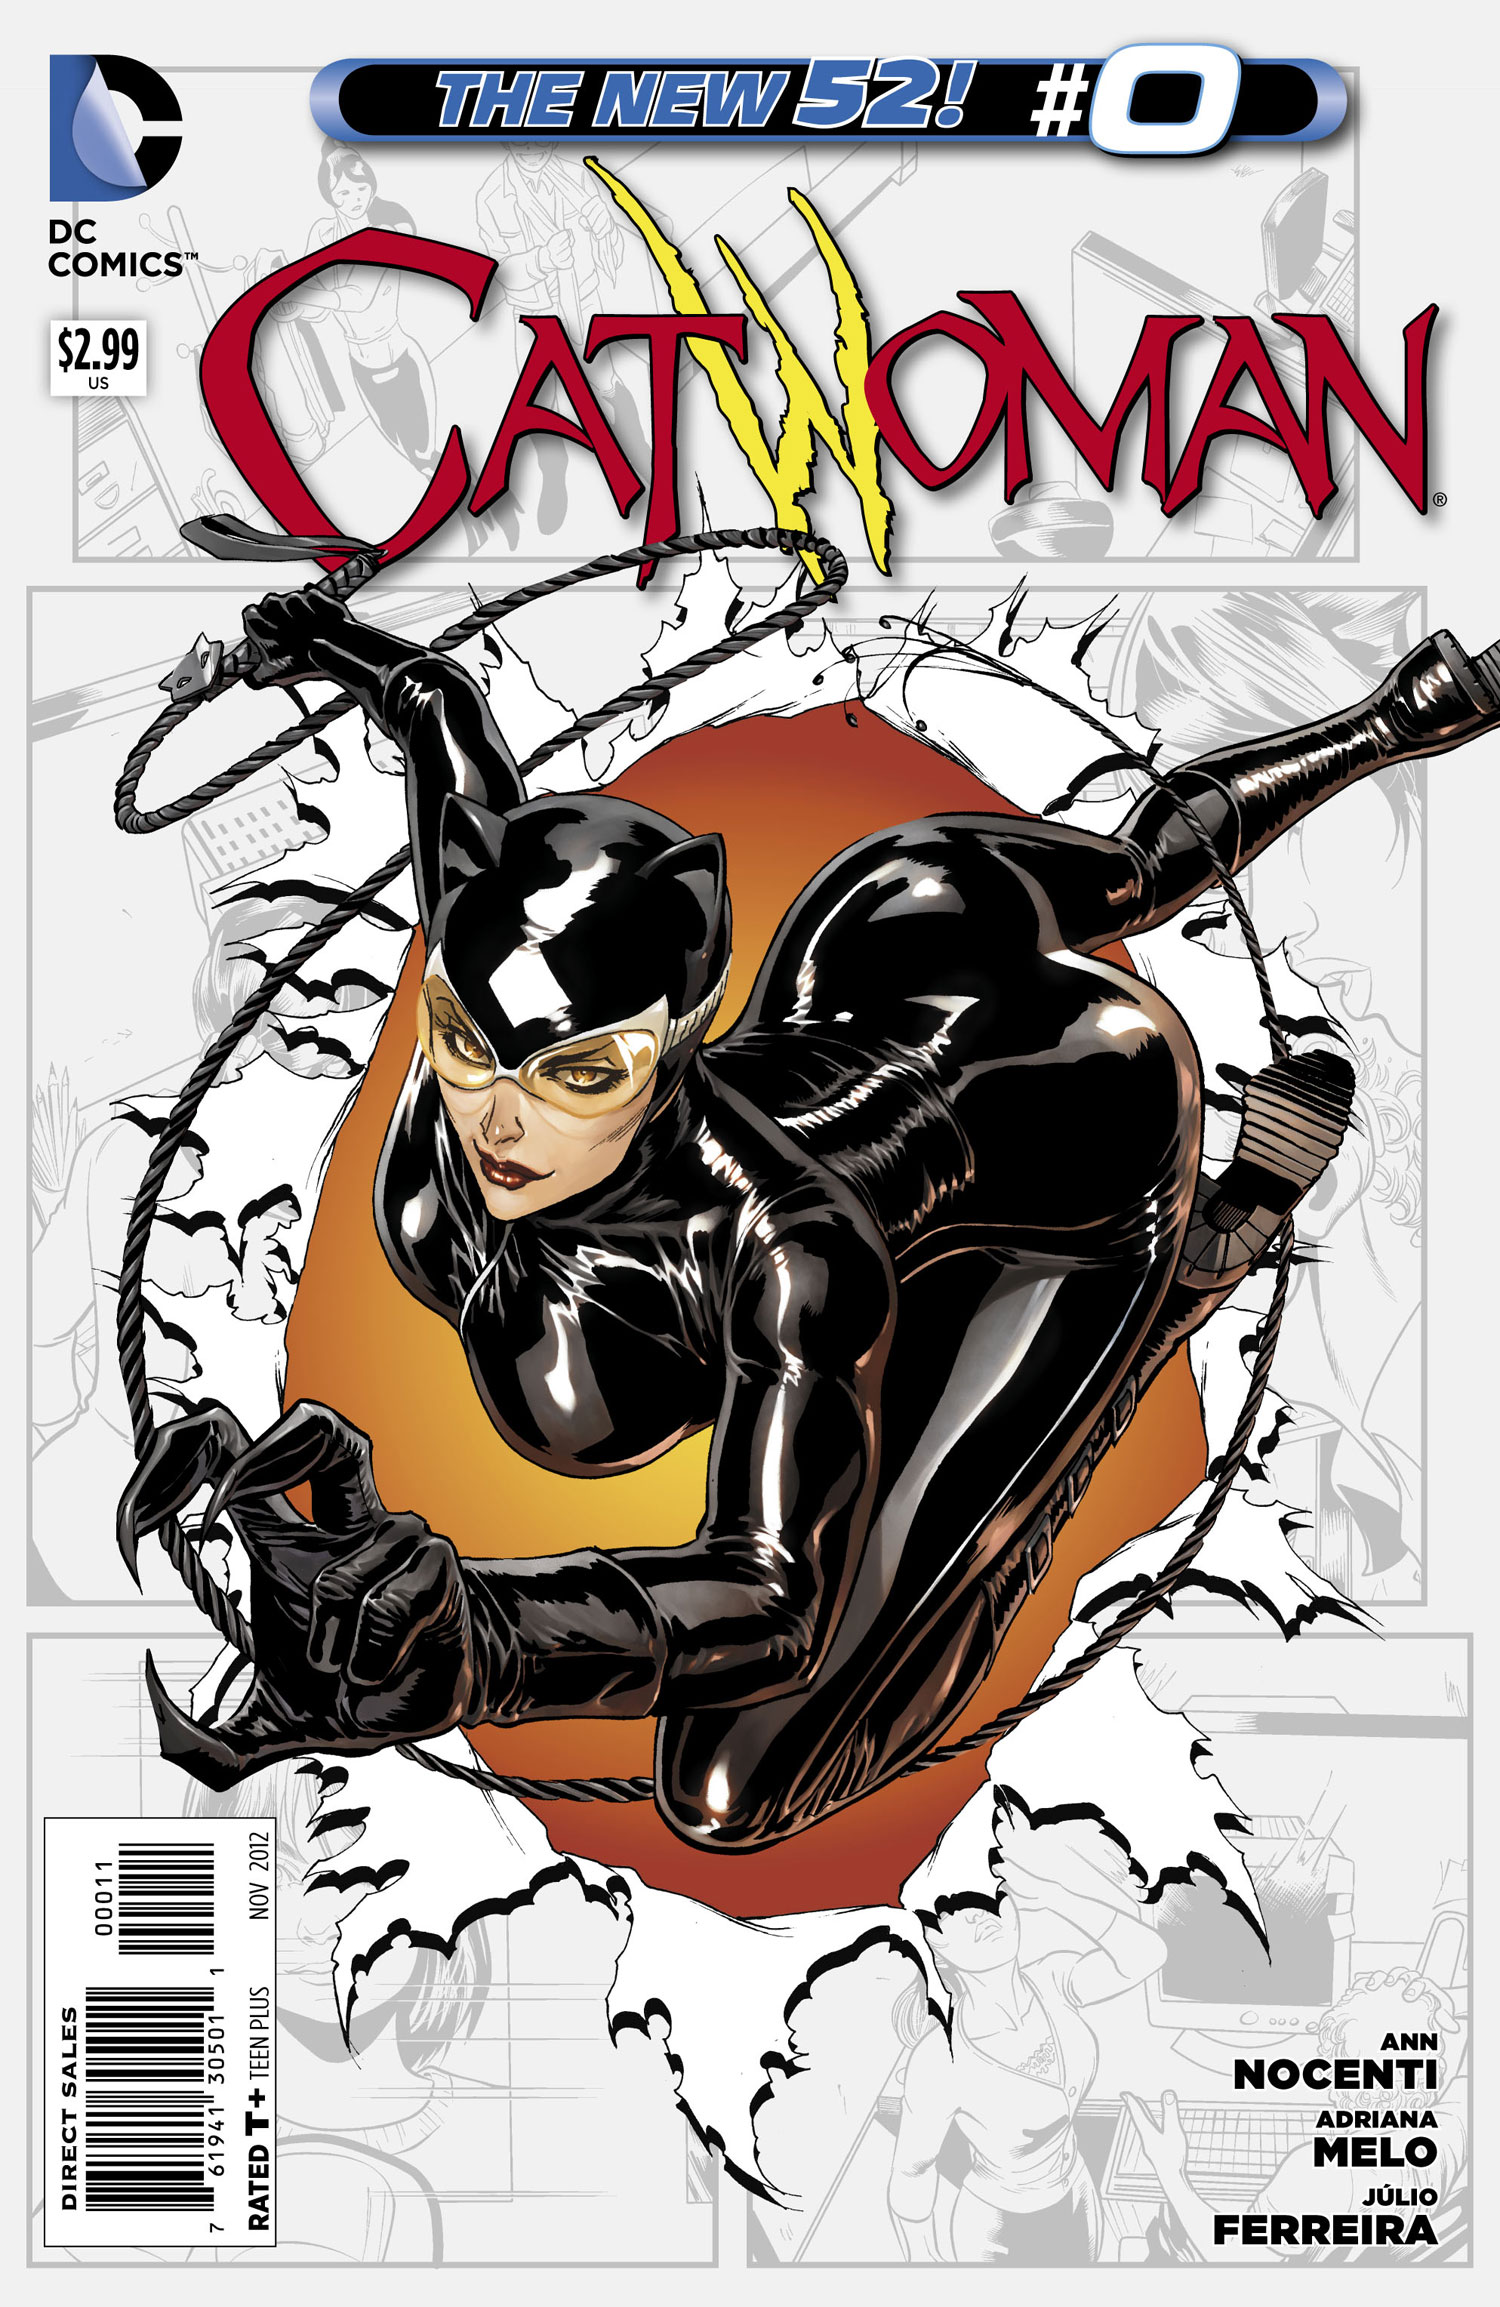 Catwoman Vol. 4 #0